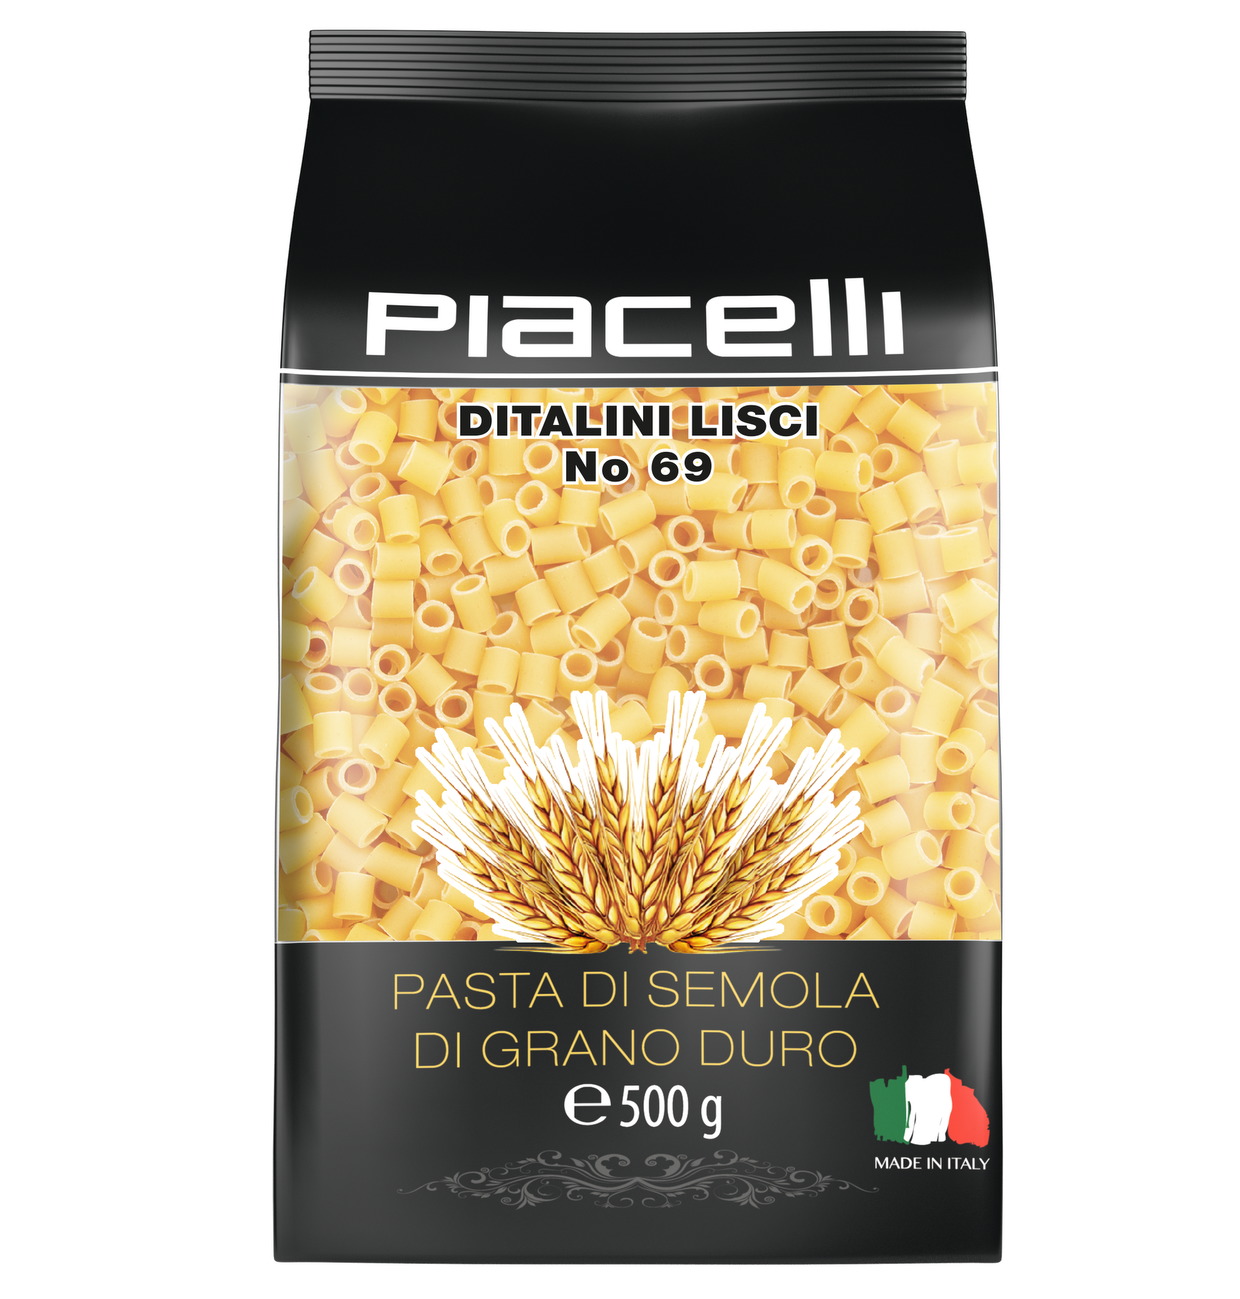 Piacelli Pasta ditalini lisci no 69 500g
